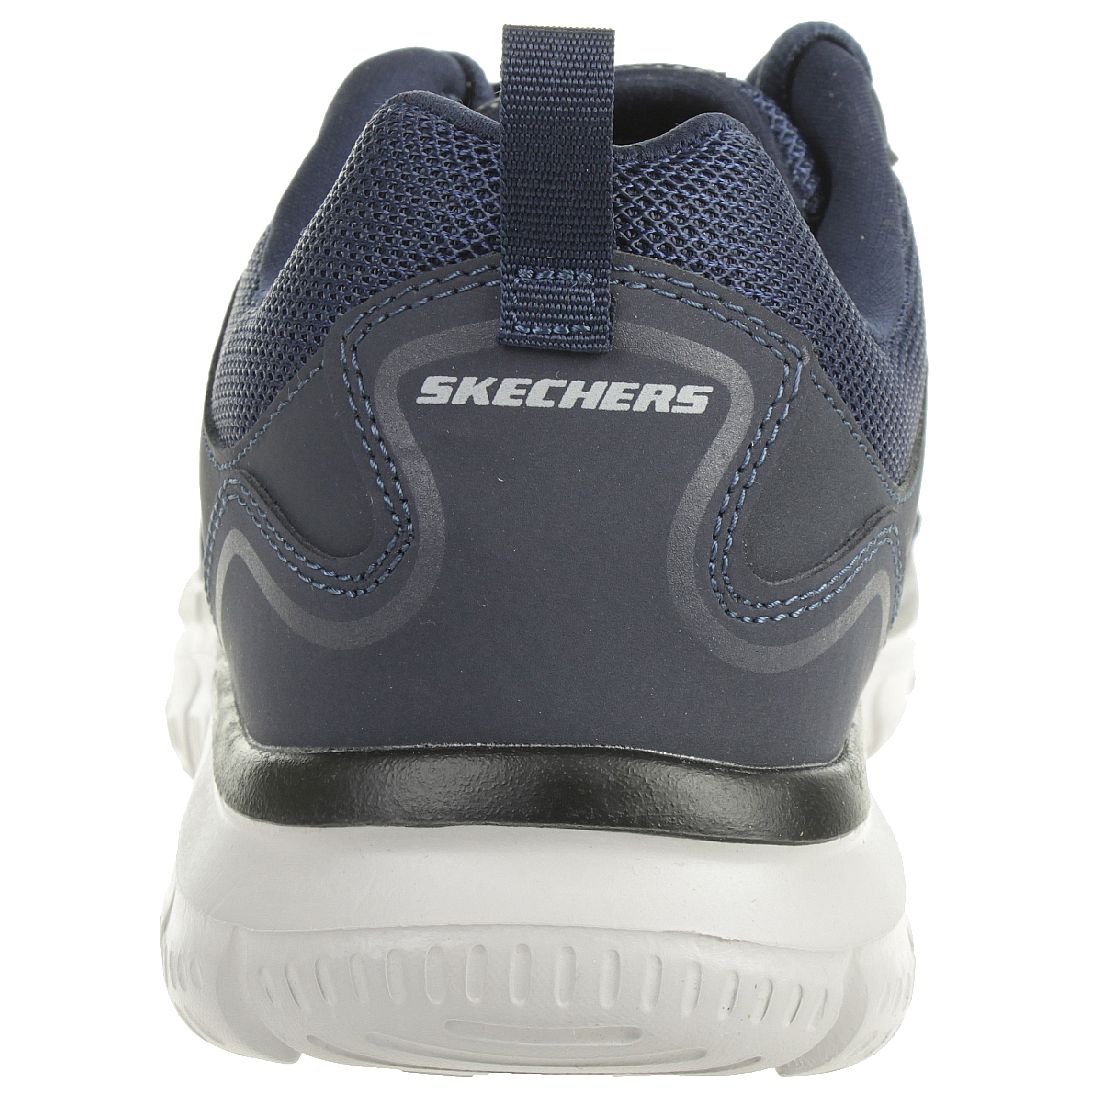 Skechers Sport Mens TRACK SCLORIC Sportschuhe/Laufschuhe Herren Wide Fit Schuhe Blau